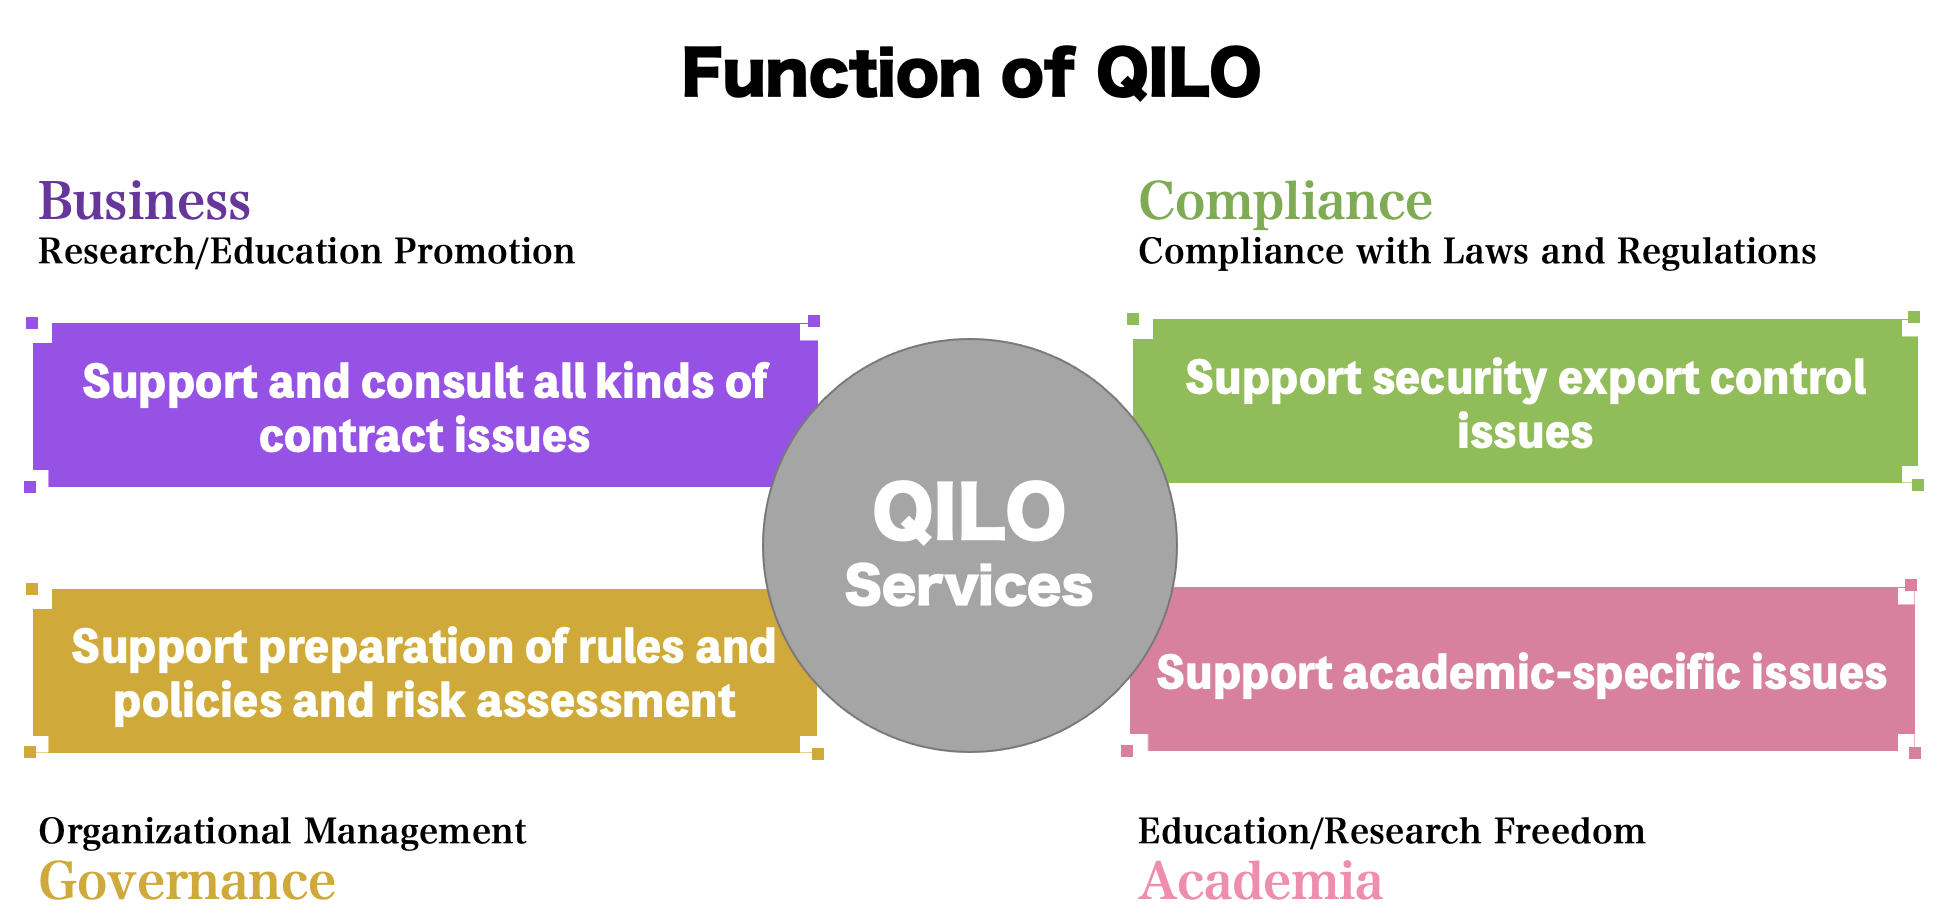 Functions of QILO